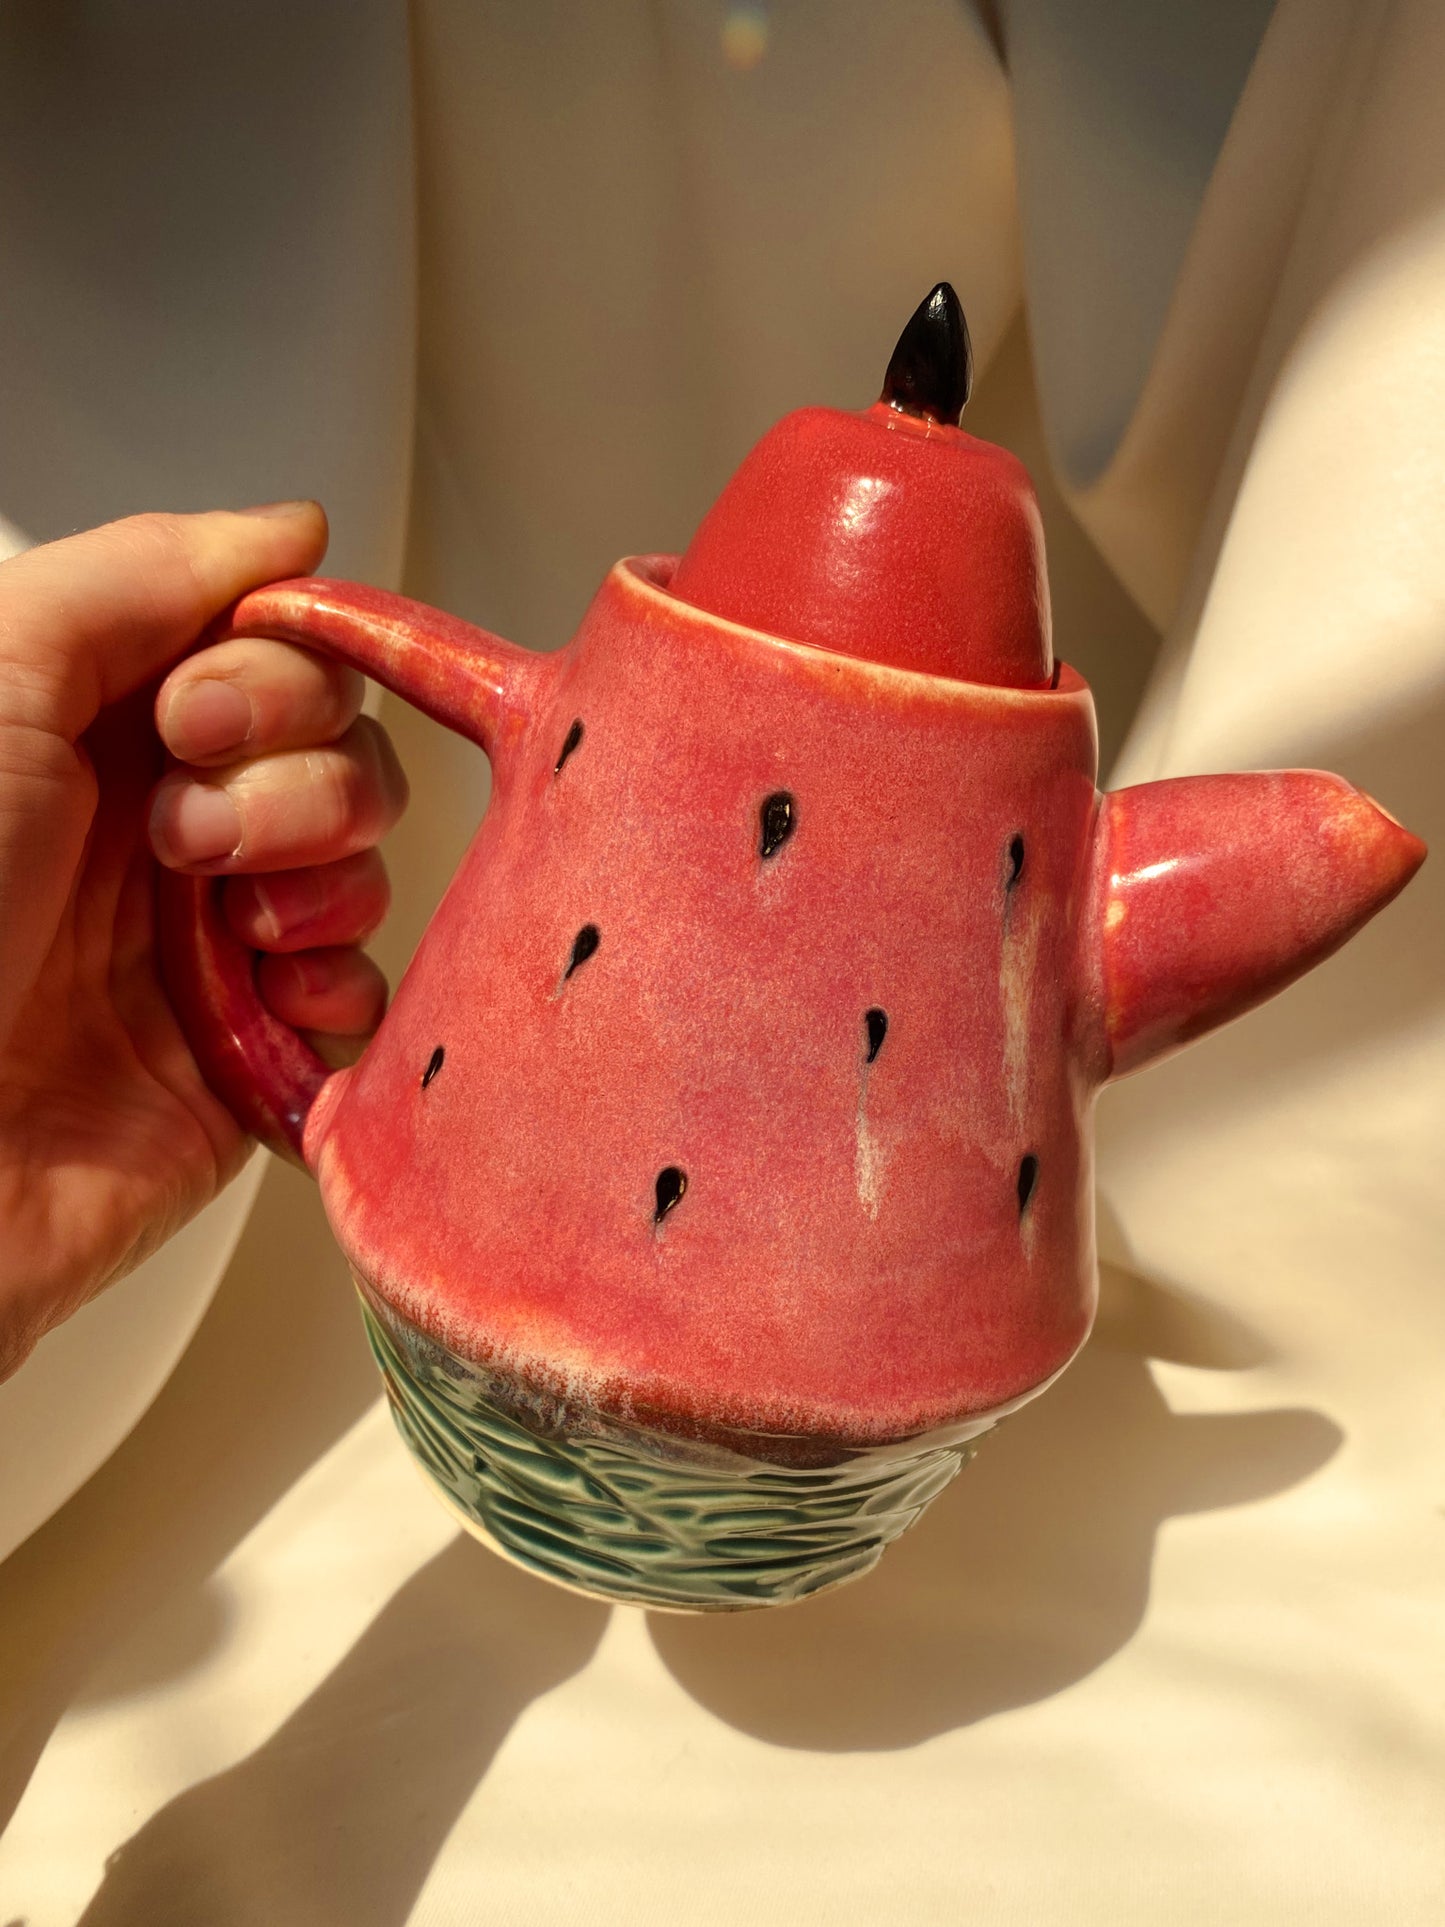 Wanda Watermelon Teapot